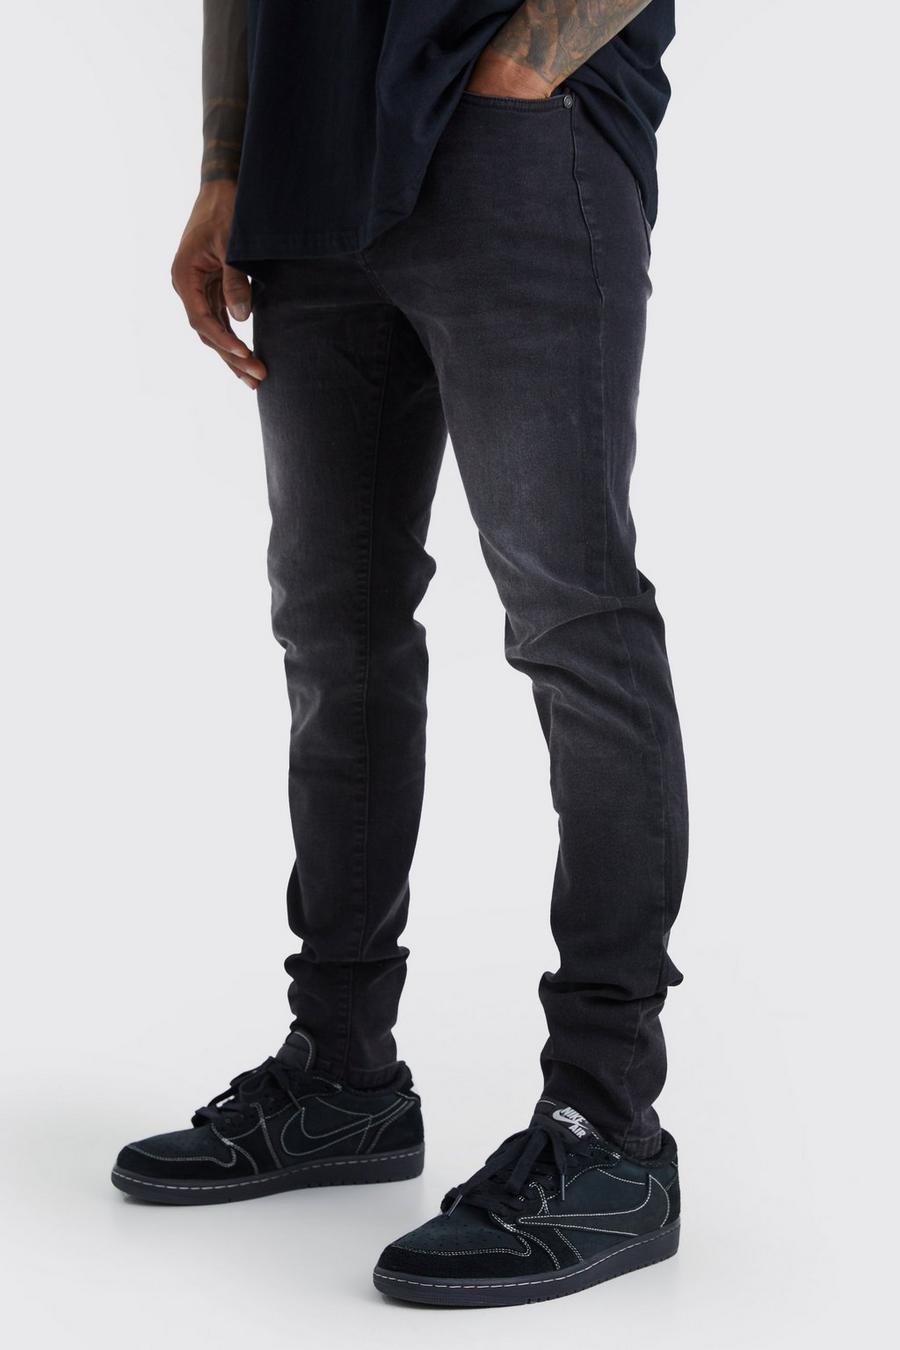 Washed black Mens Clothing Jordan x PSG Mesh Jersey Hyper Cobalt Jerseys 